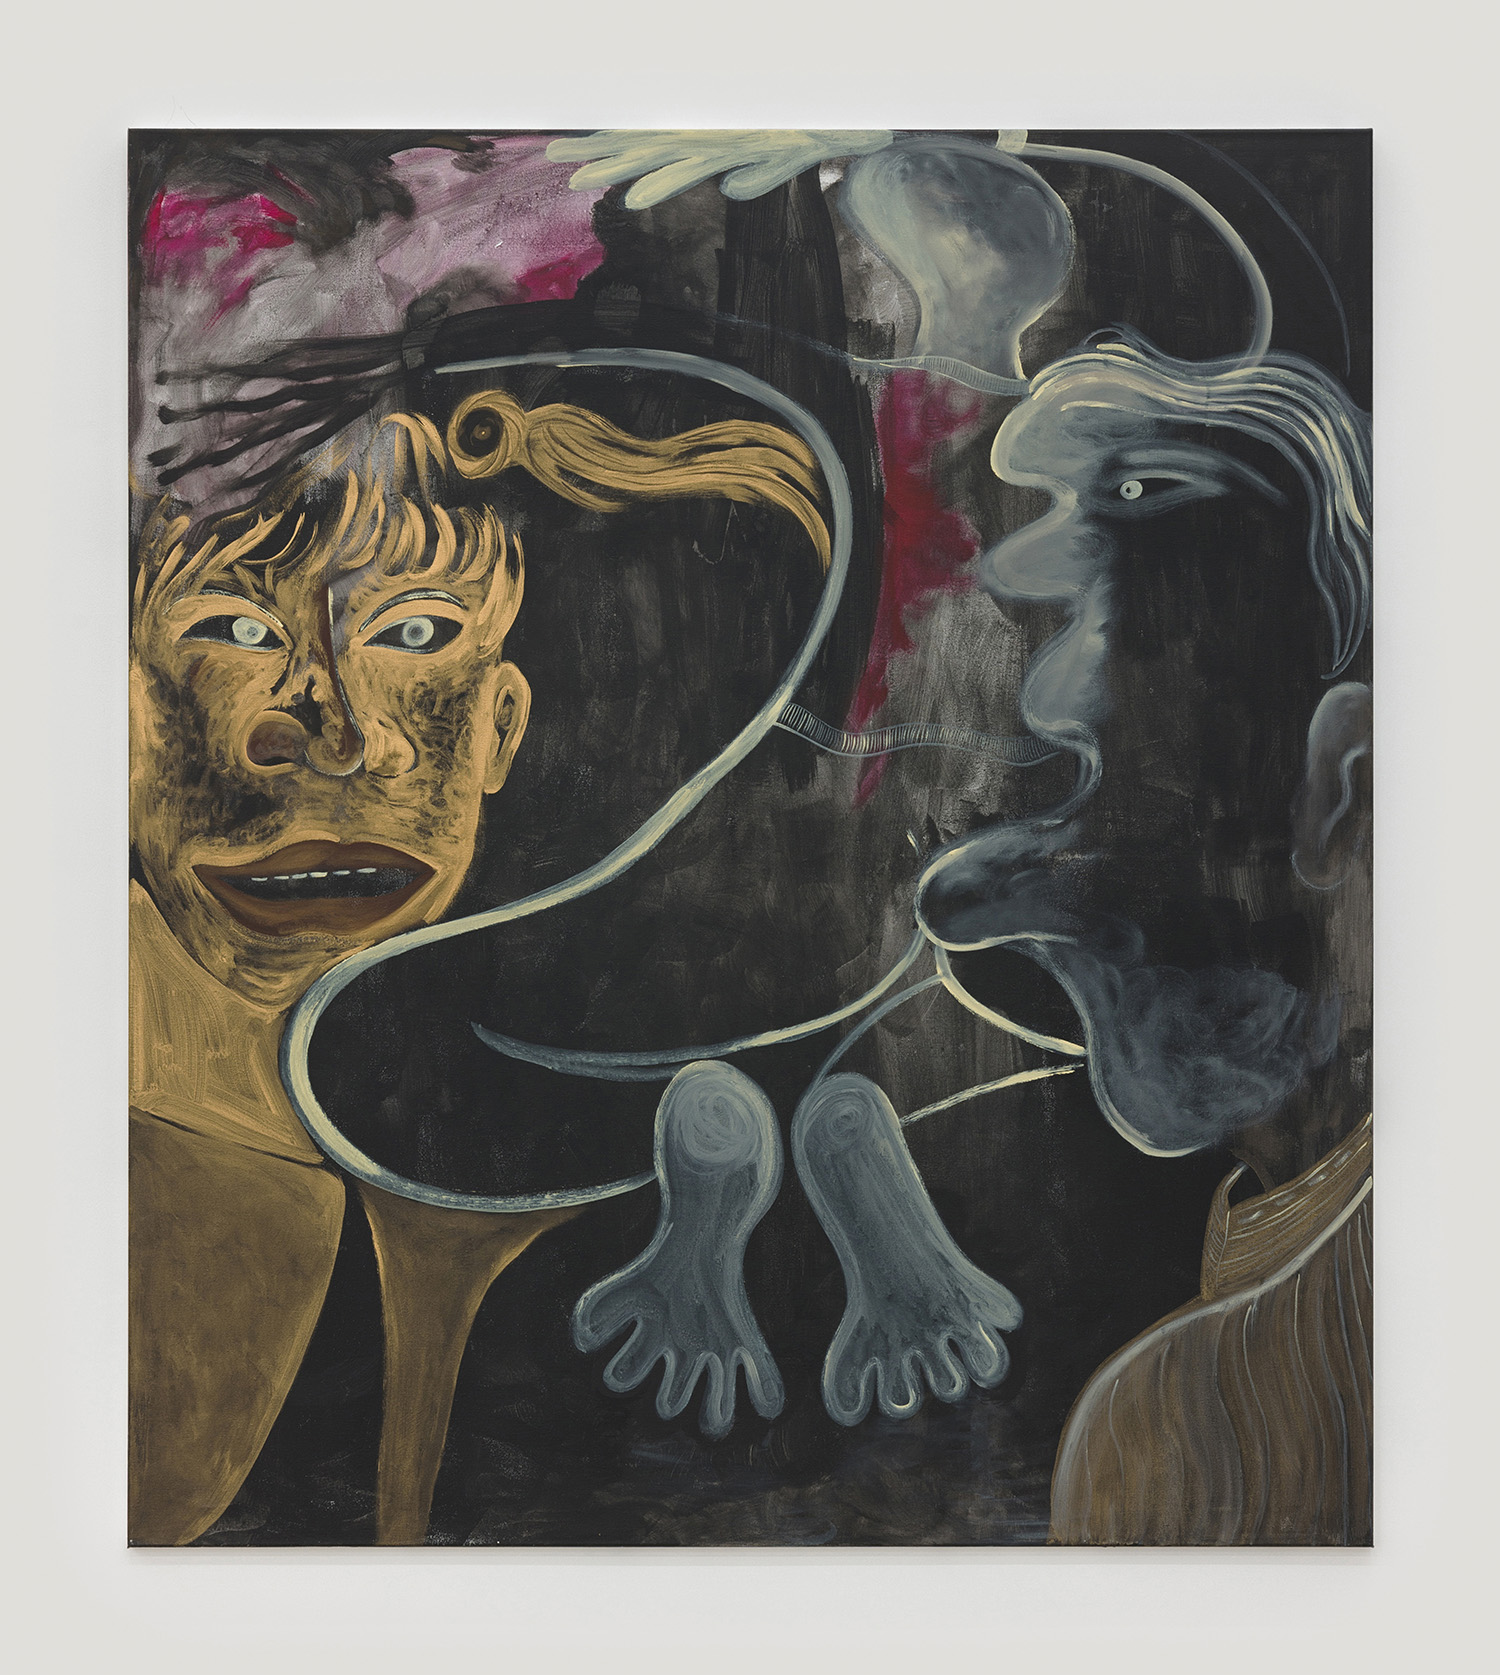 Nicholas Grafia, The Conjuring, 2021, acrylic on canvas, 160 x 140 cm, 63 x 55 1/8 in